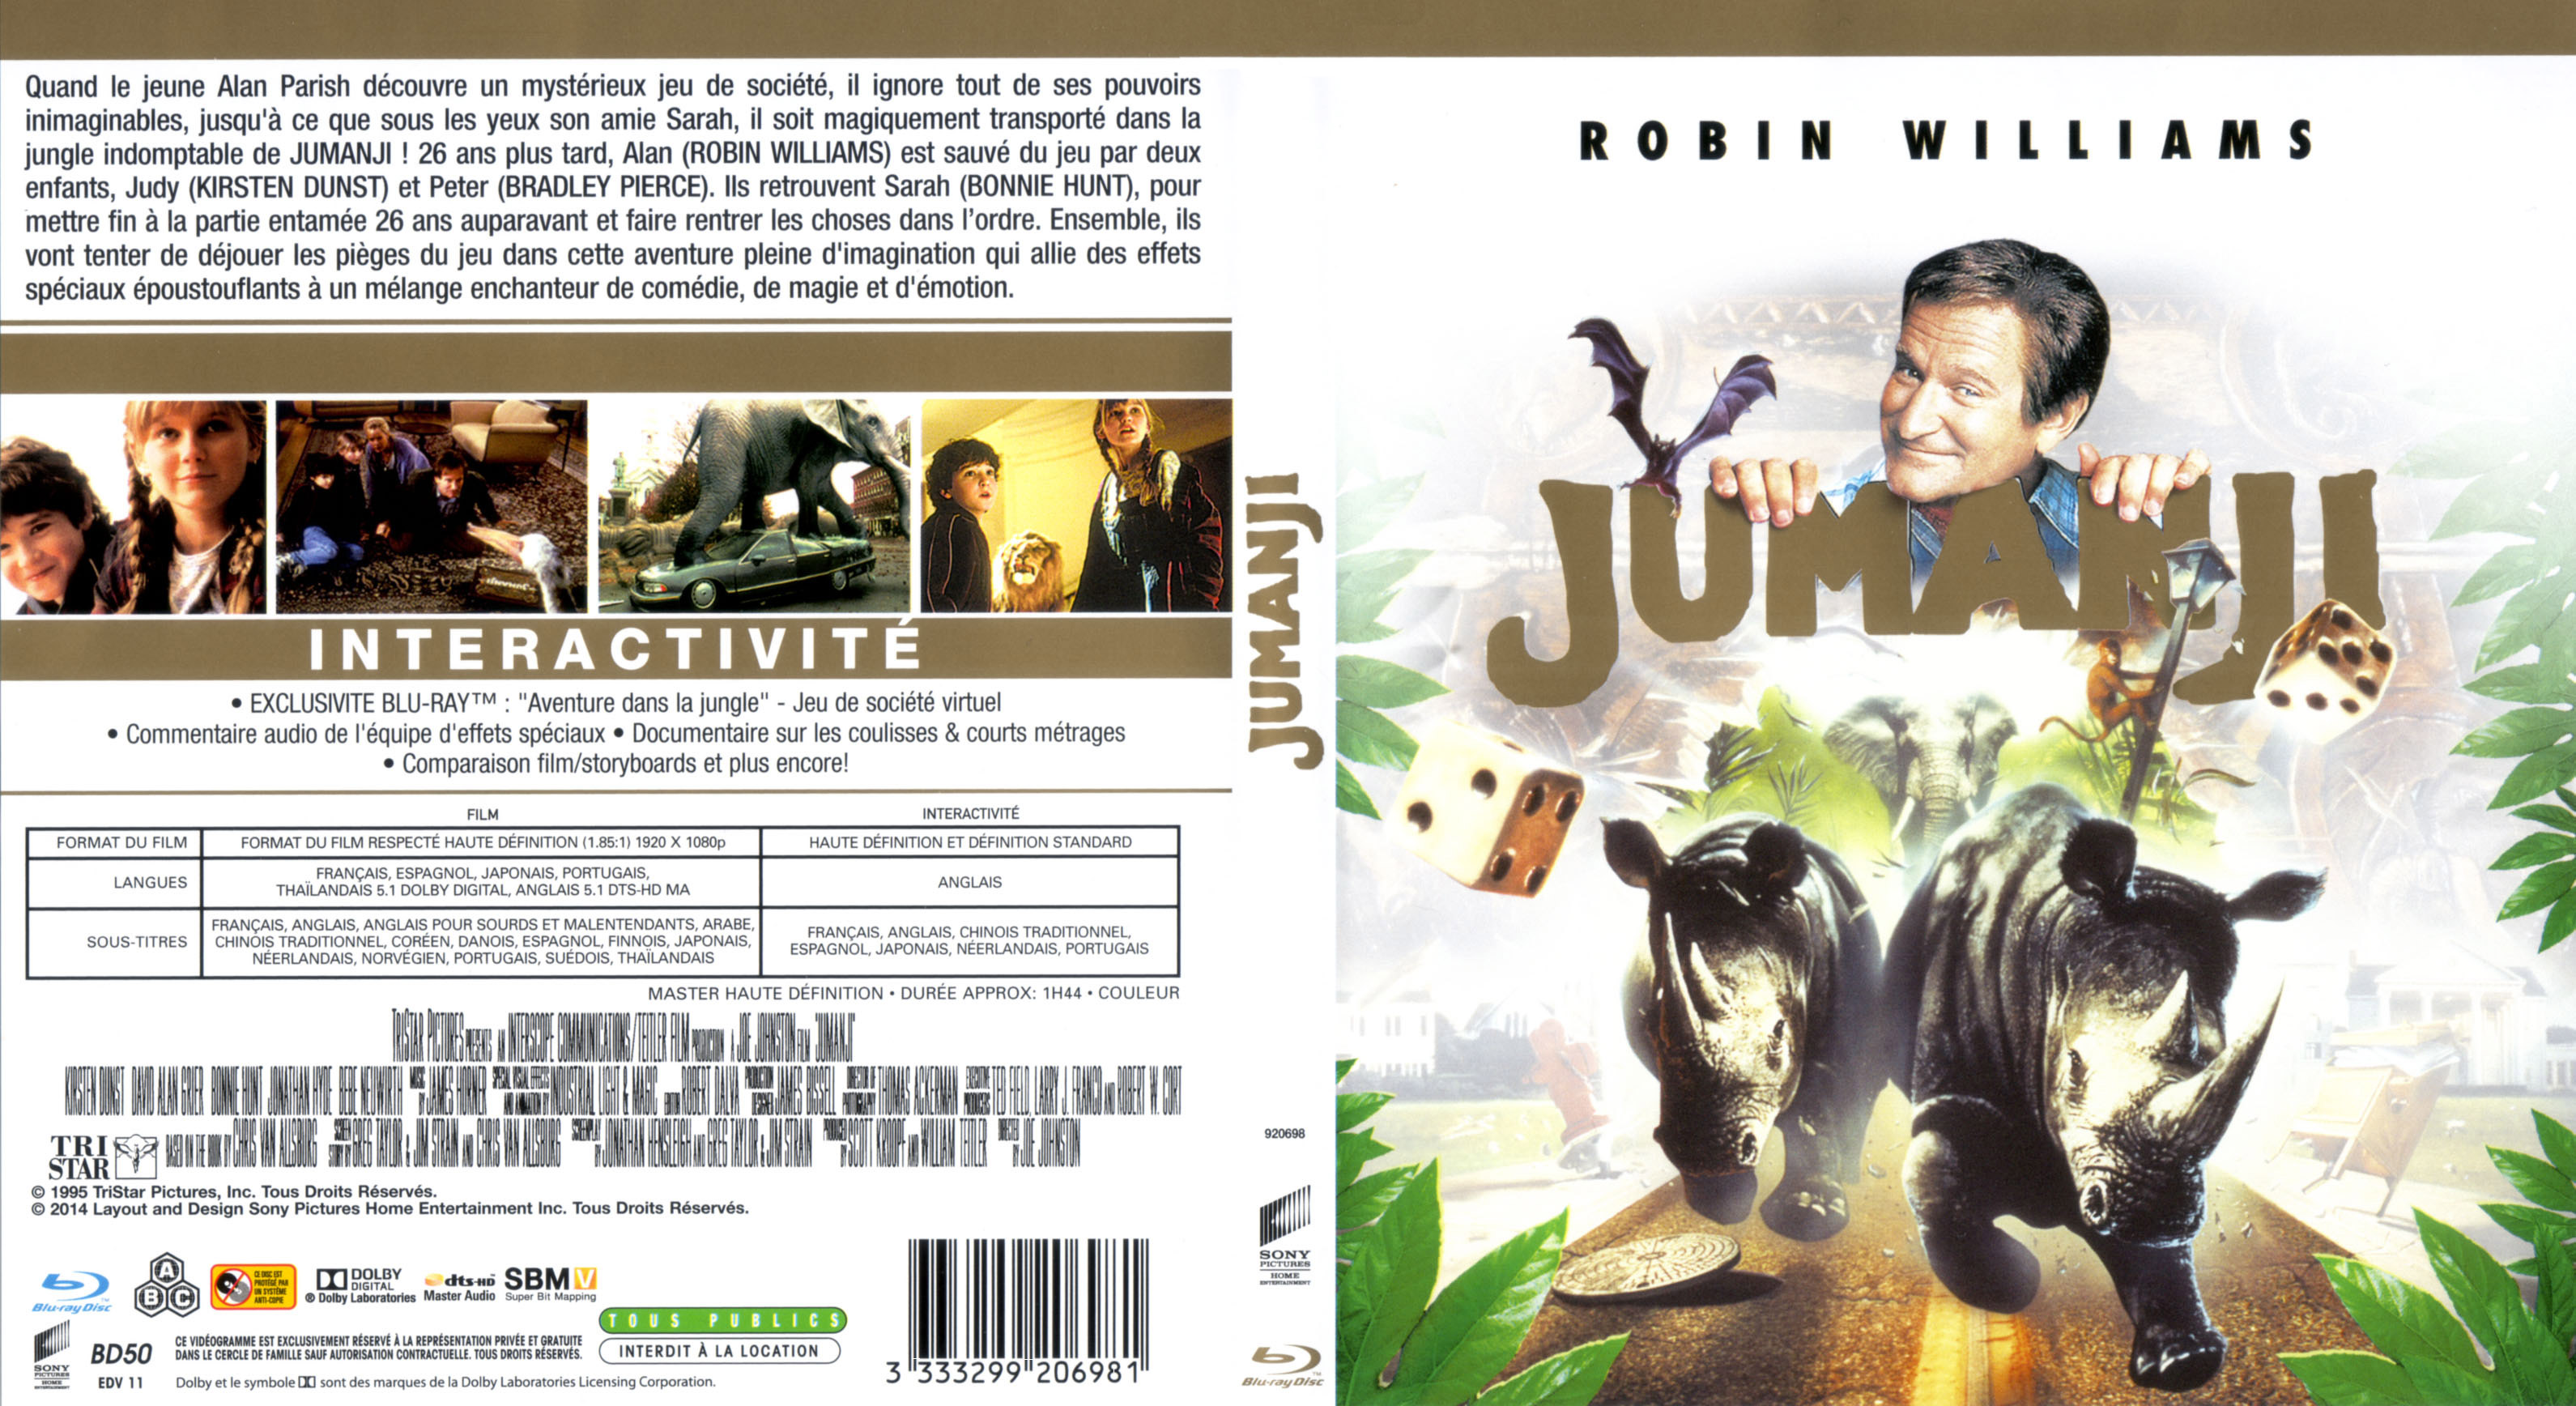 Jaquette DVD Jumanji (BLU-RAY) v2